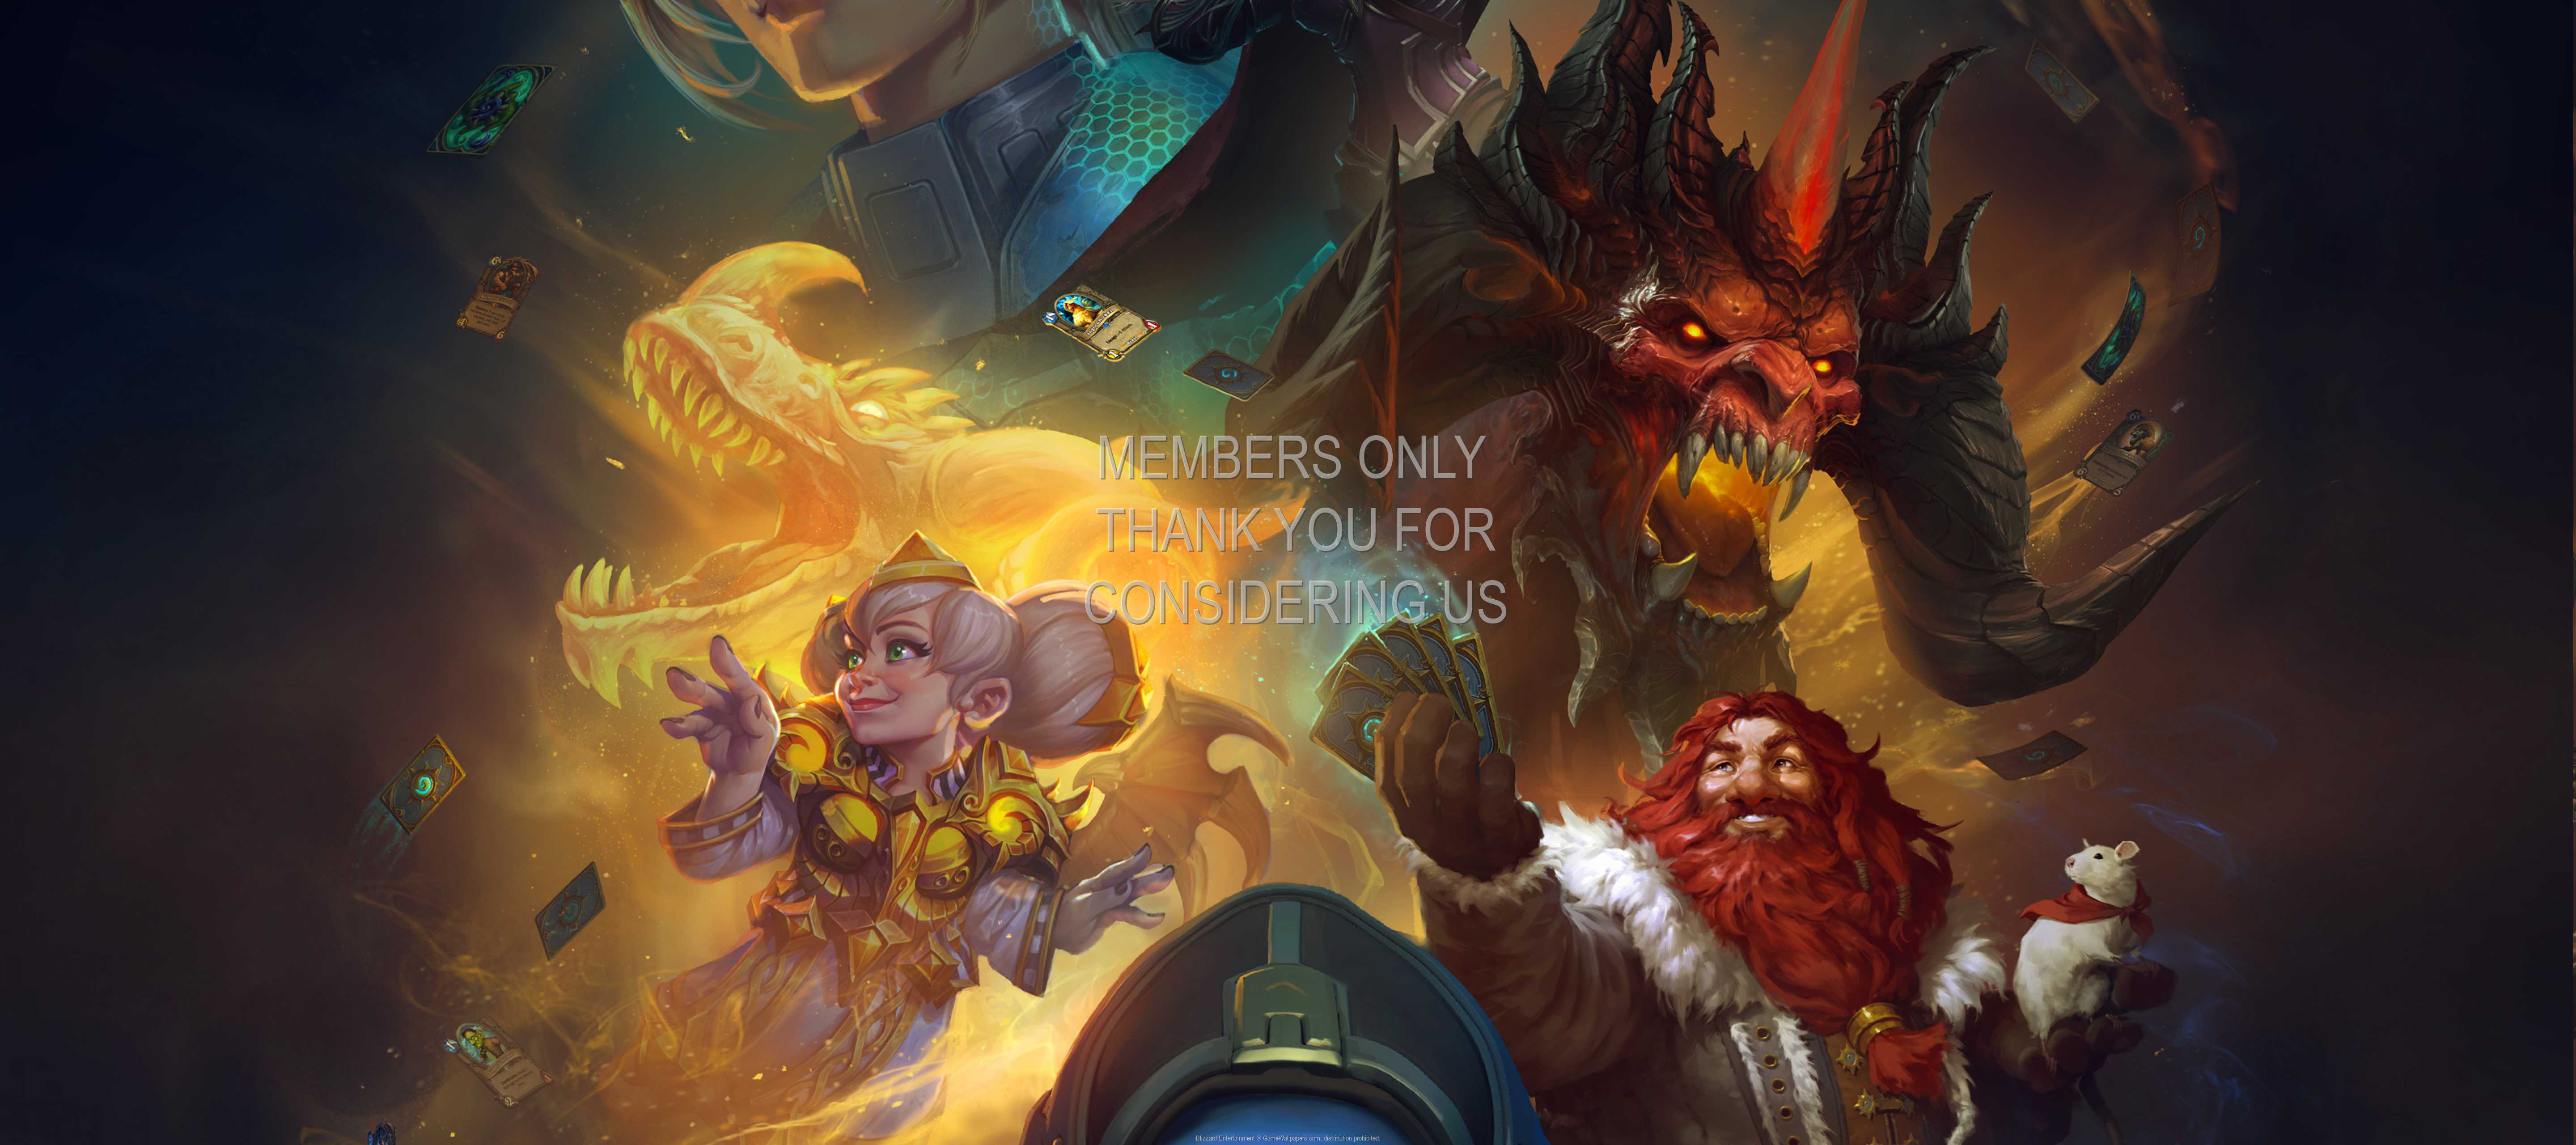 Blizzard Entertainment 1440p%20Horizontal Mobile wallpaper or background 03